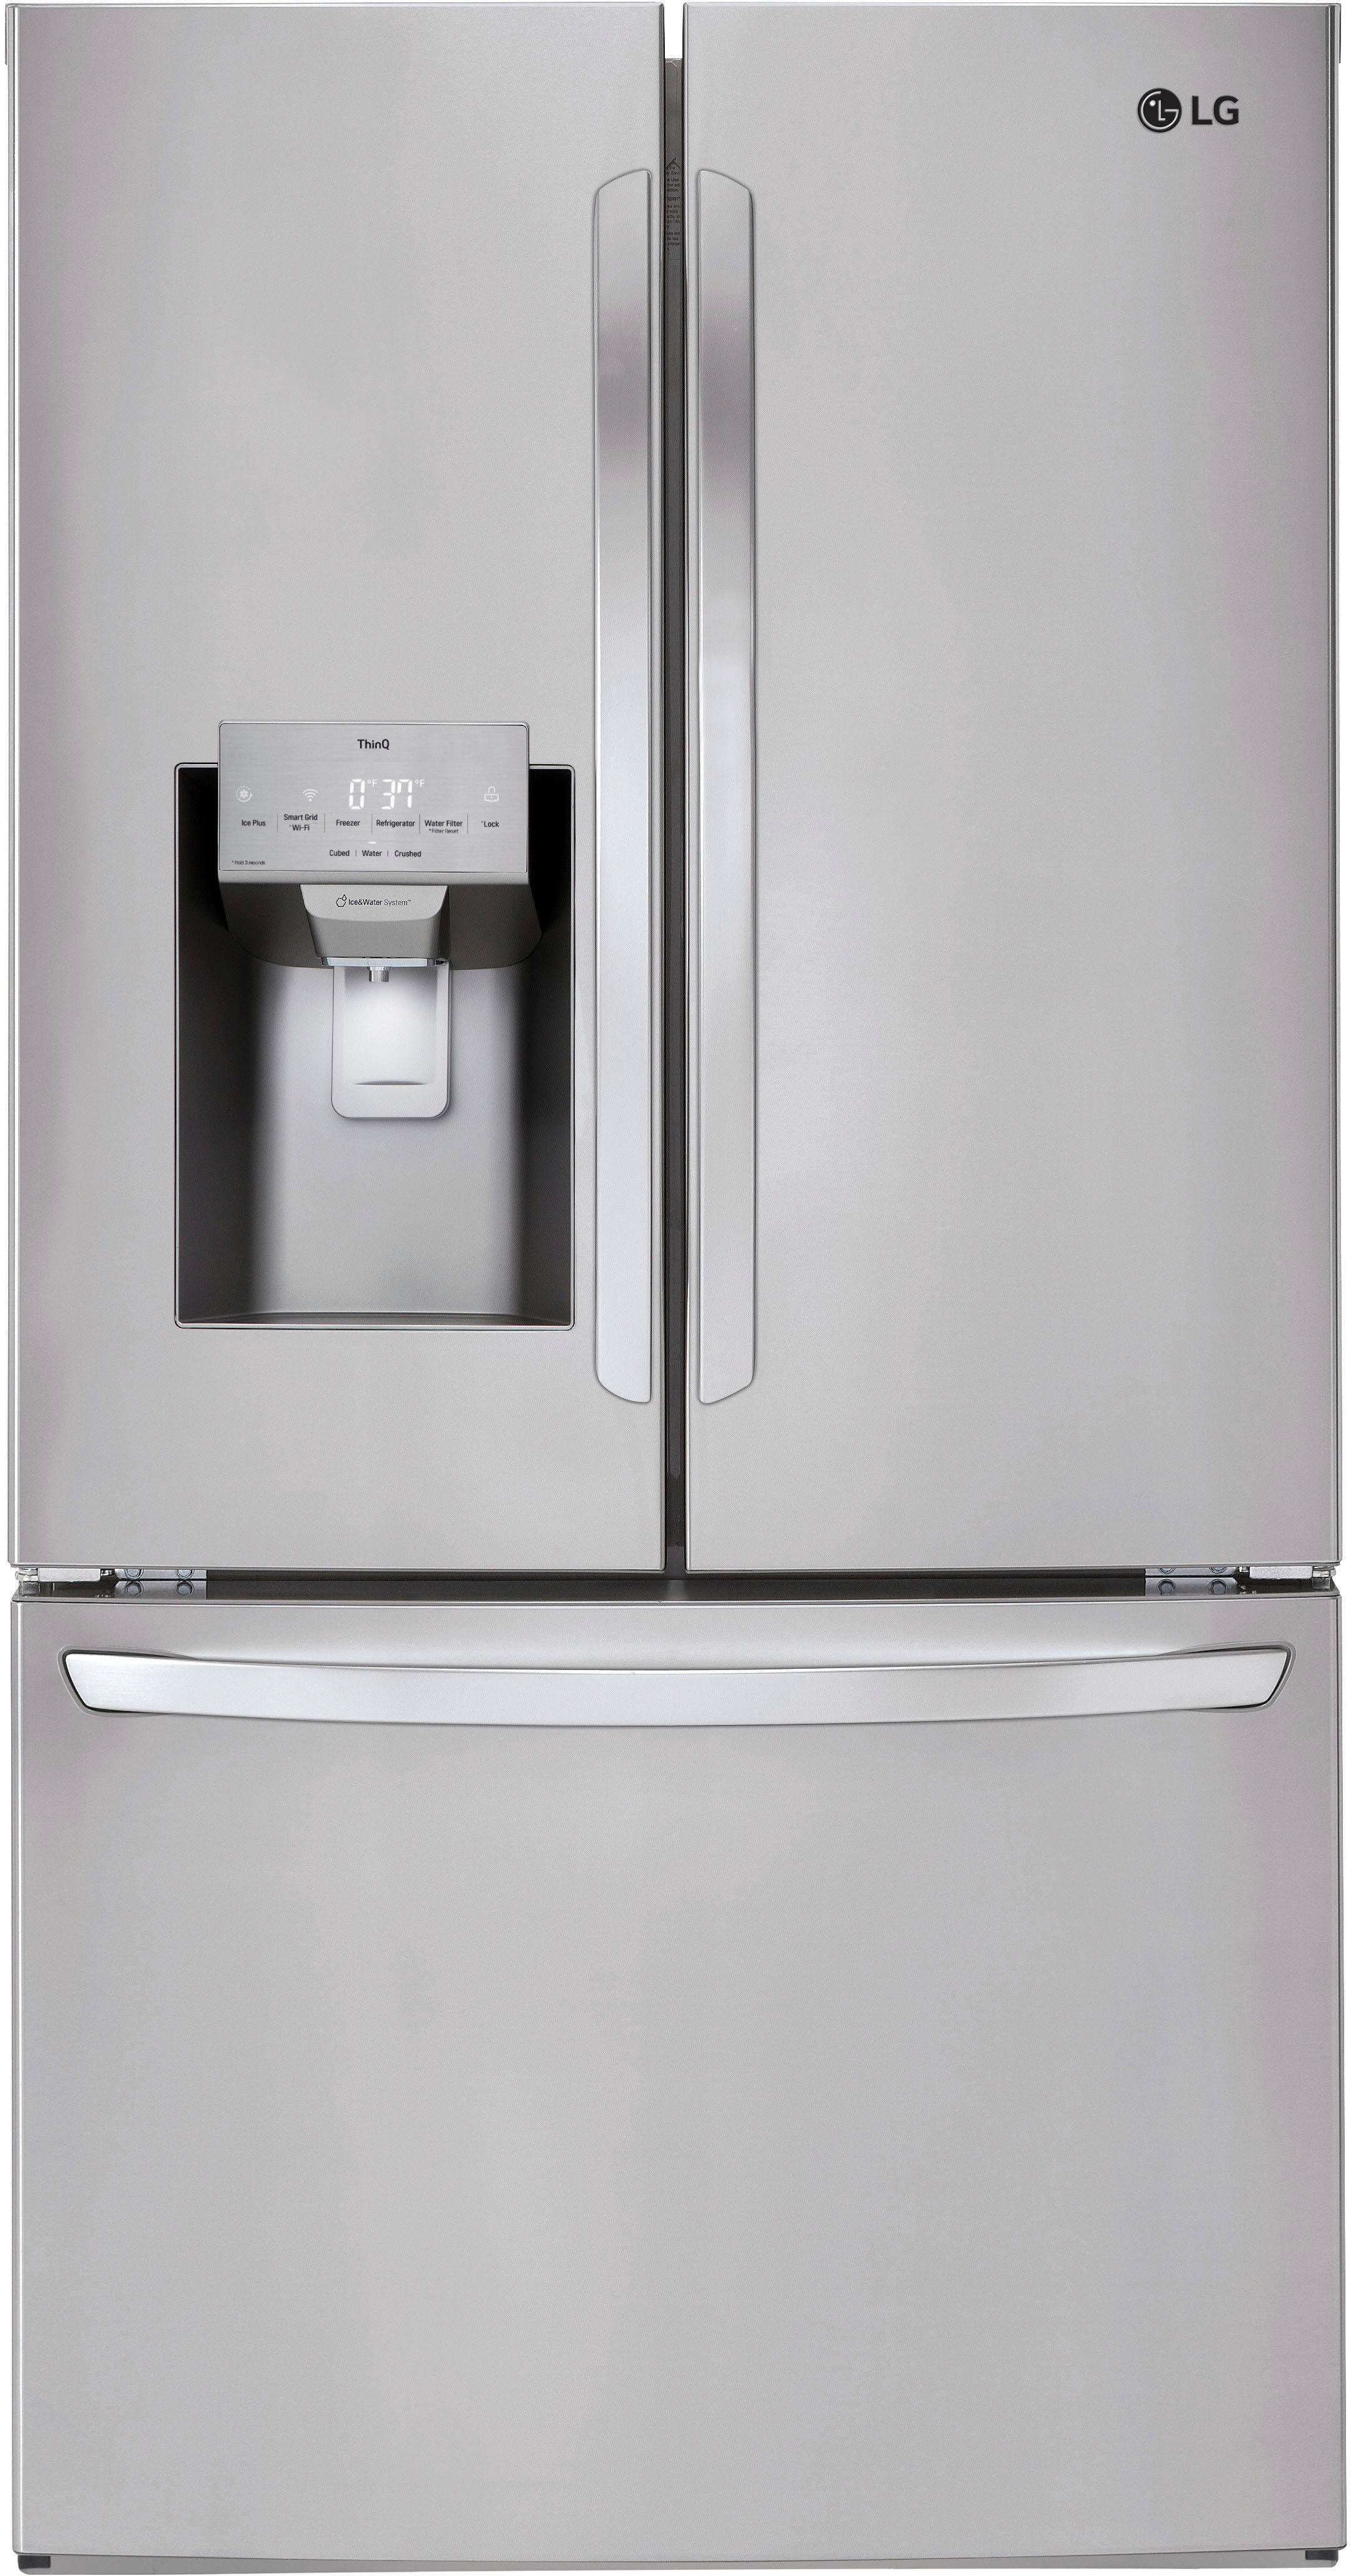 Shelfy: a smart purifier for your refrigerator